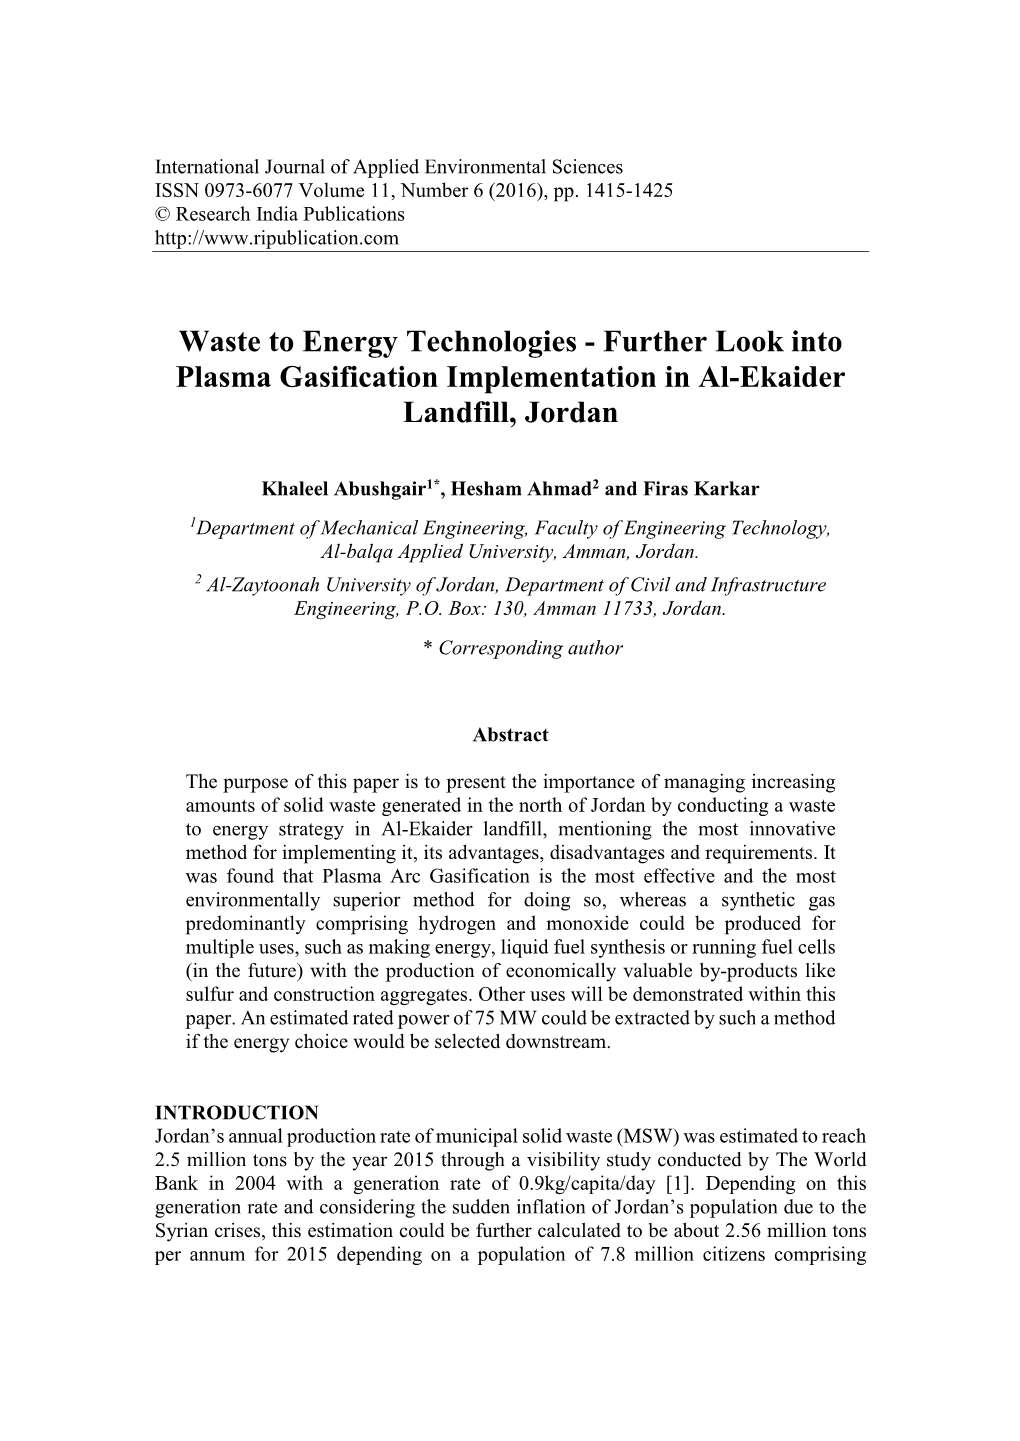 Plasma Gasification: Case Study of Al-Ekaider Landfill